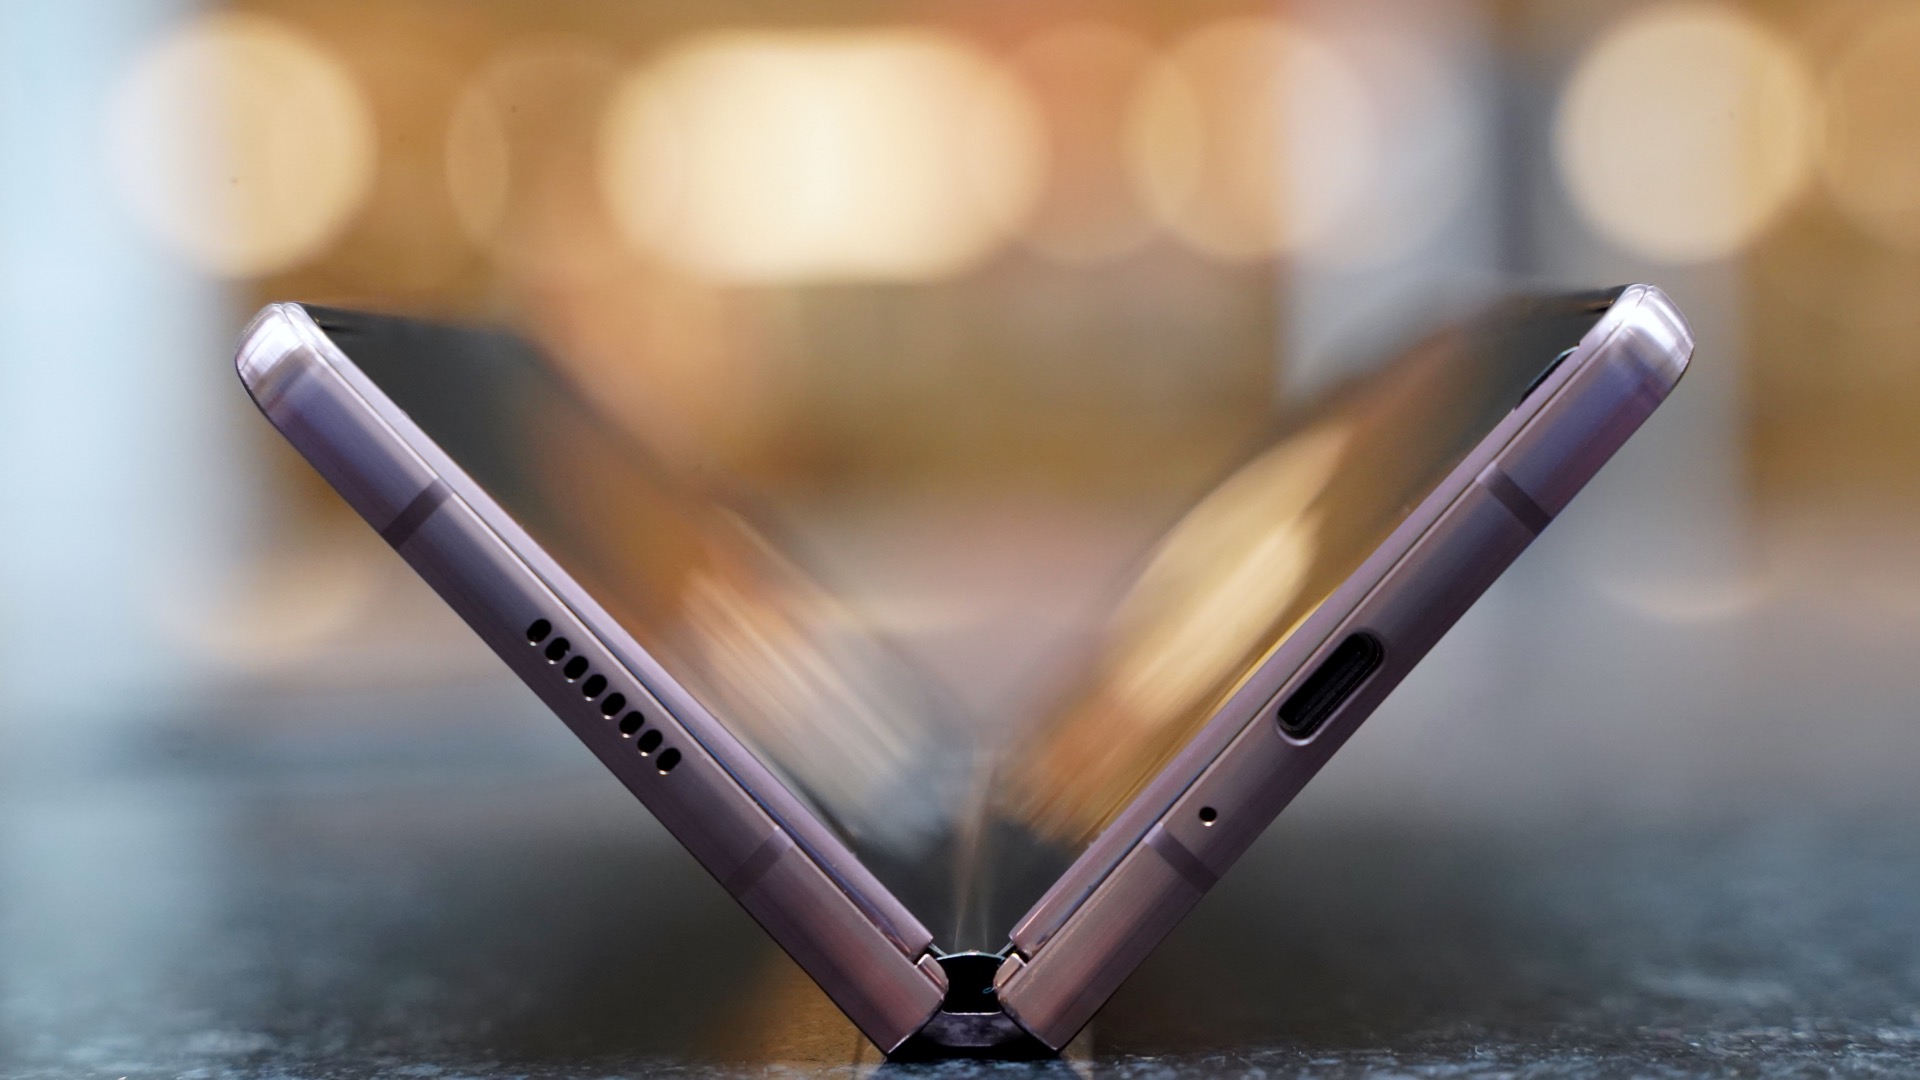 Samsung Galaxy Z Fold 2 review: An impressive multitasking machine